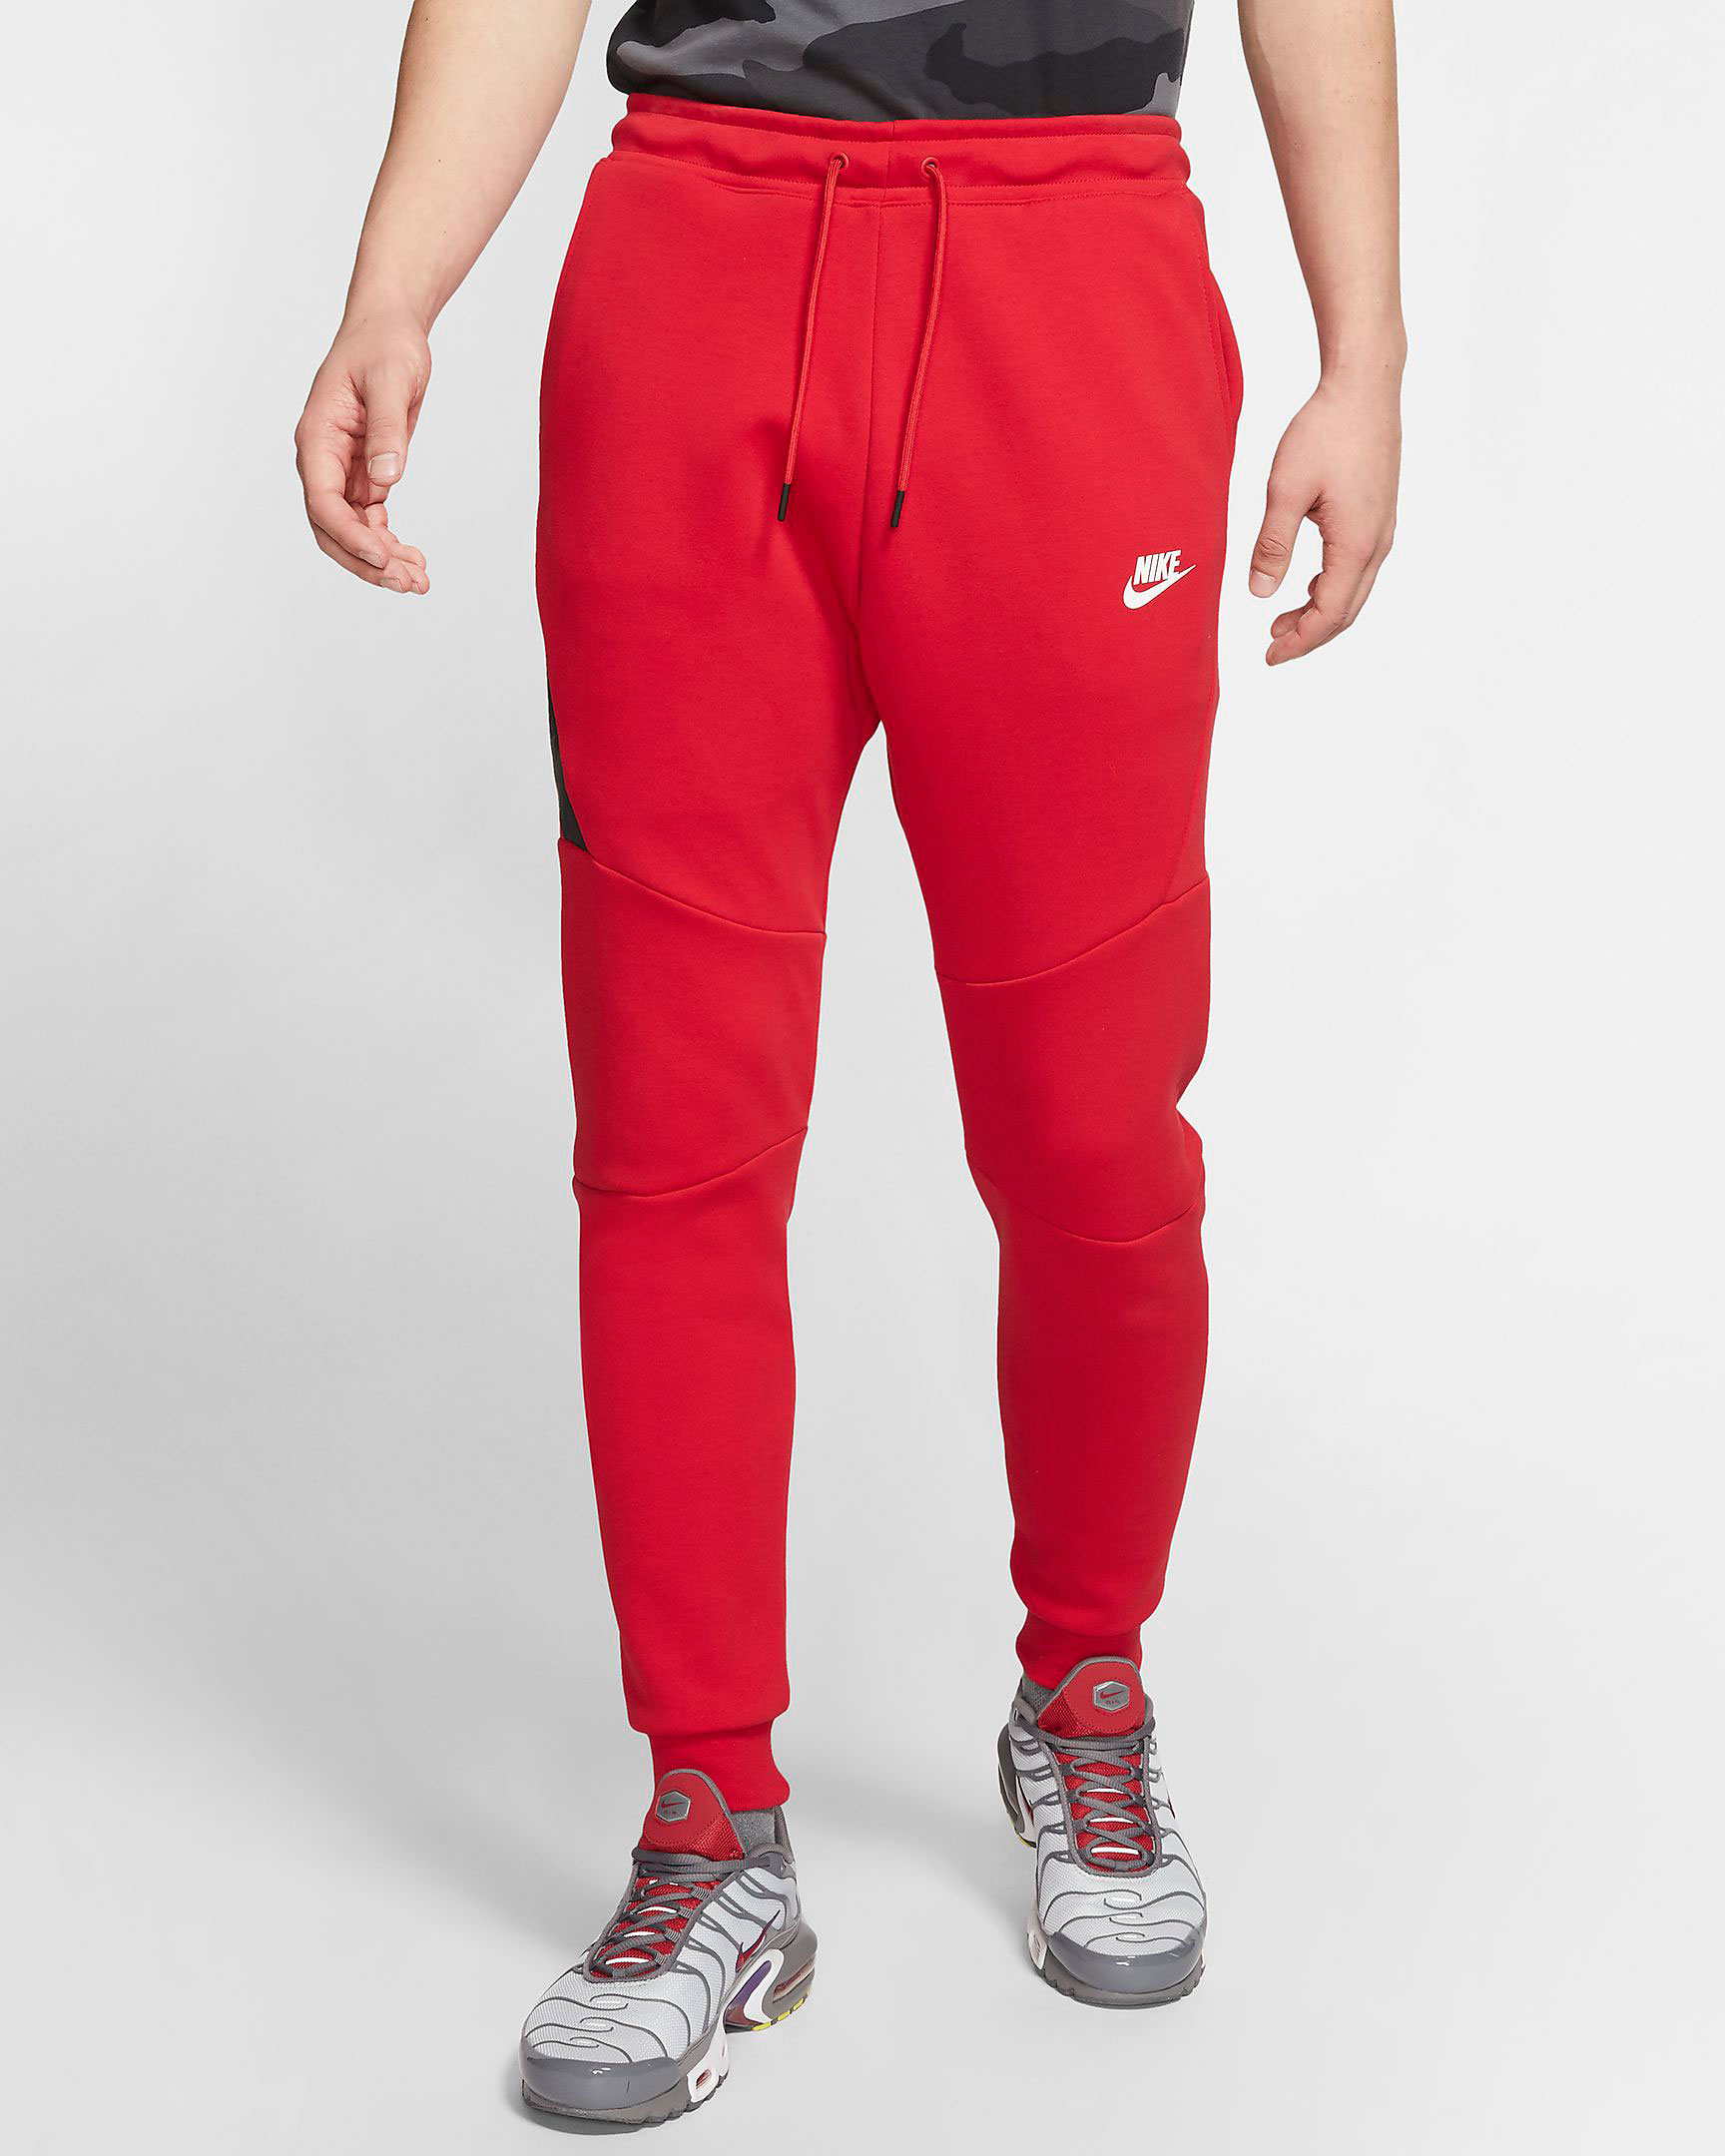 nike-red-tech-fleece-jogger-pants